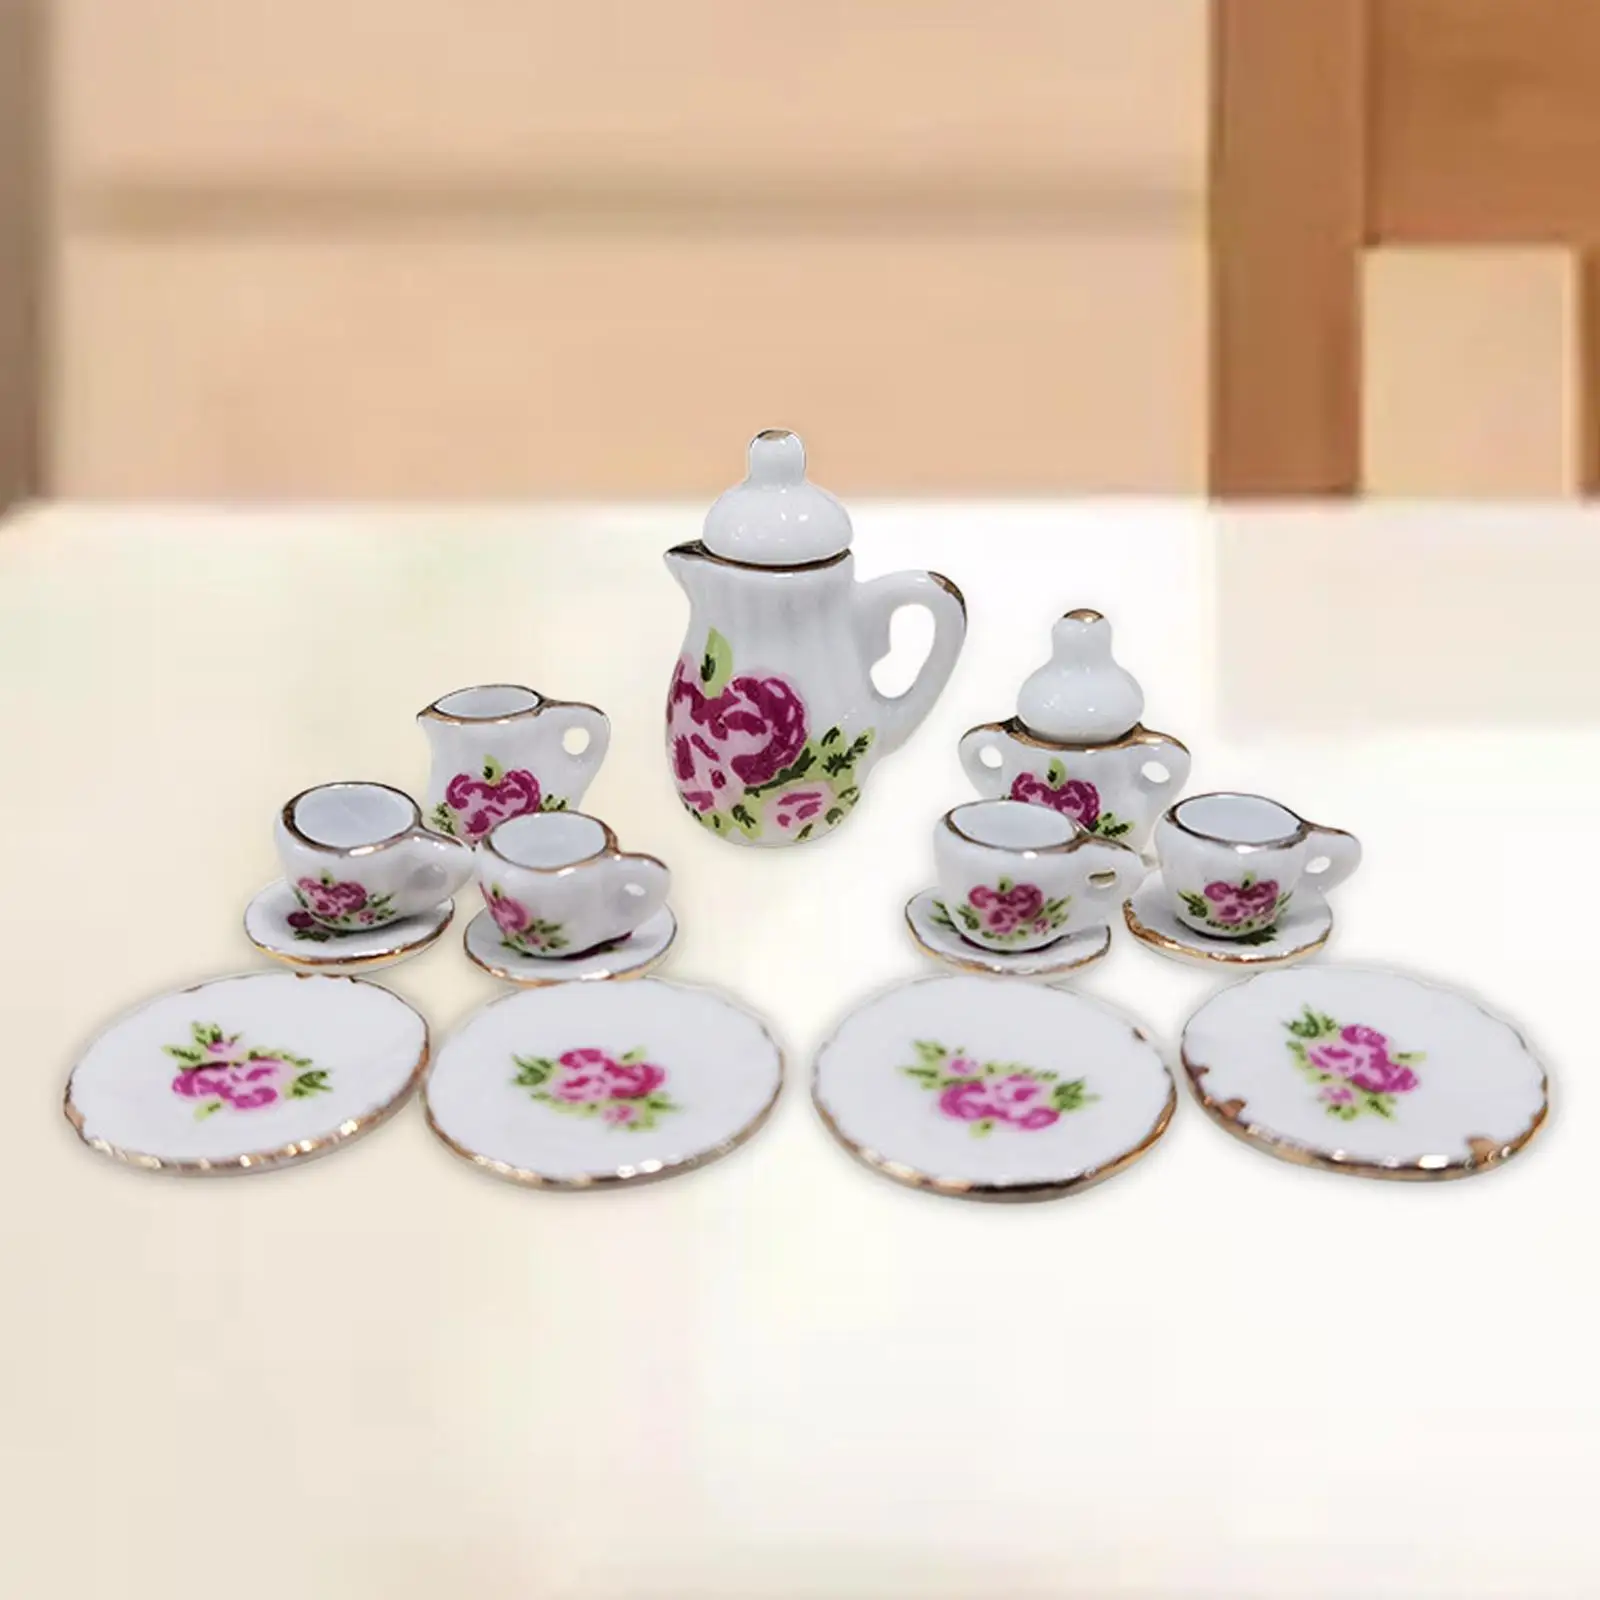 1/12 Mini Teapot Cup Plate Living Room Simulation Dining Ware Accessories Toys Dollhouse Miniature Porcelain Tea Cup Decor